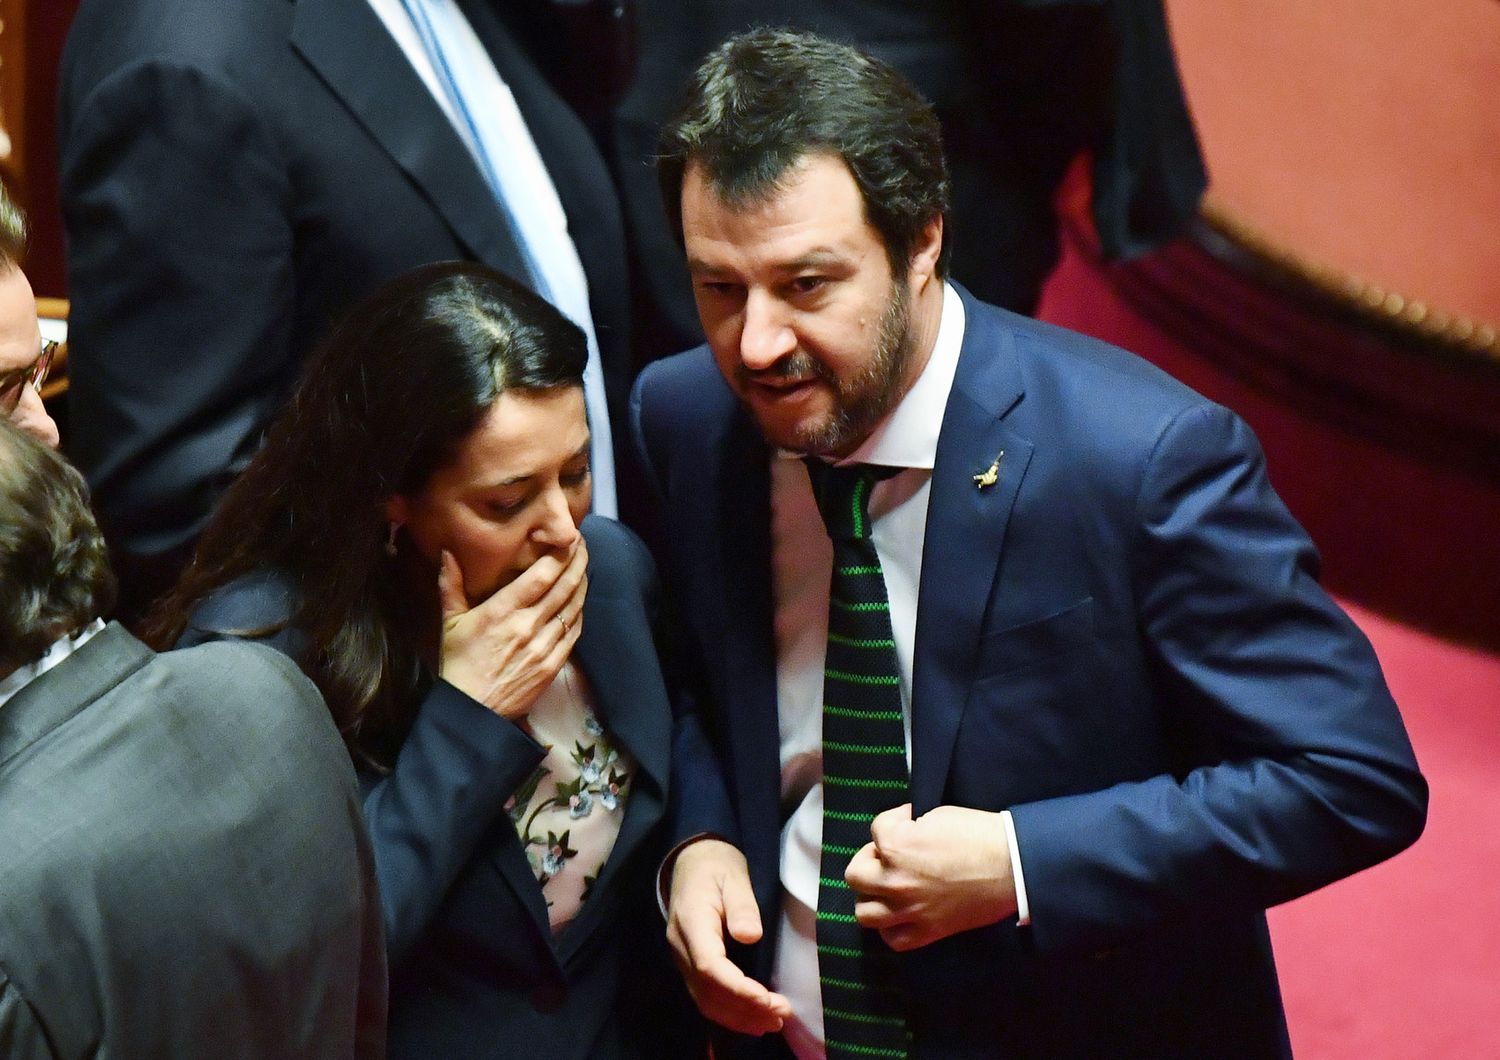 &nbsp;Matteo Salvini